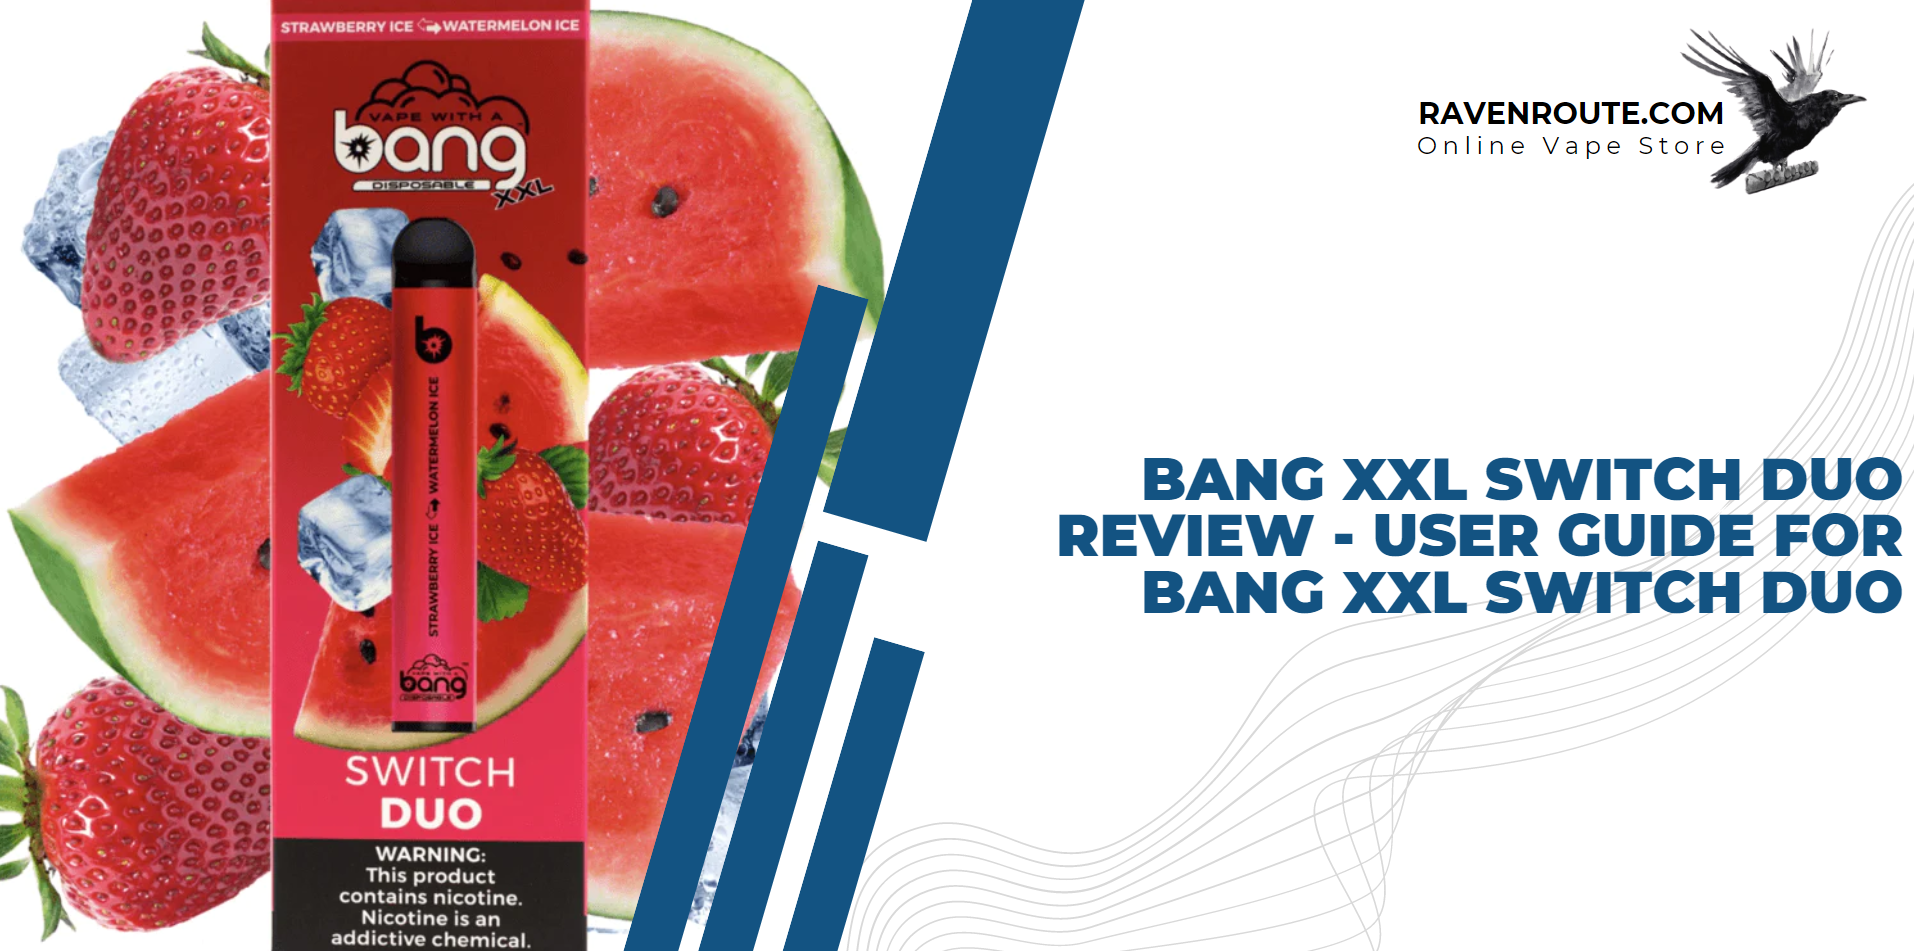 Bang XXL Switch Duo Review - User Guide for Bang XXL Switch Duo